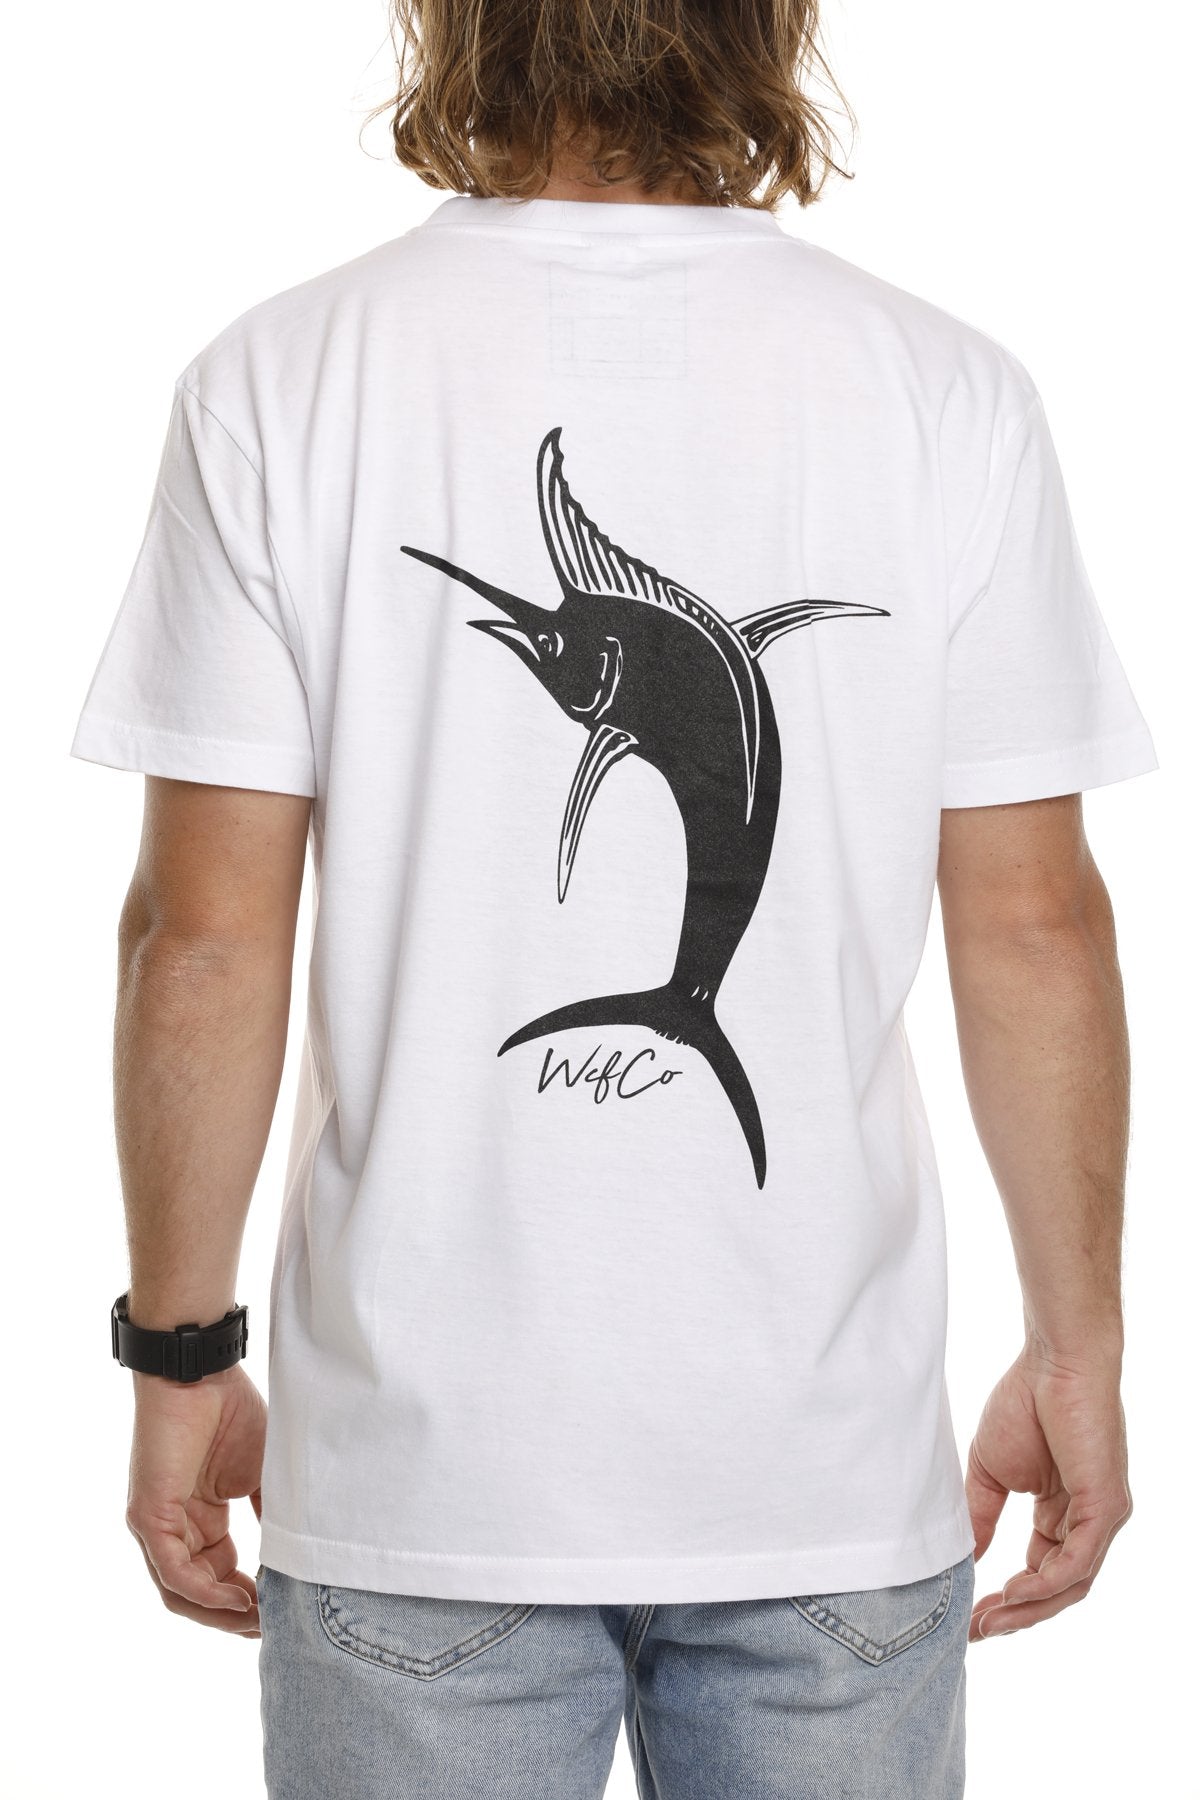 West Coast Fishing Co Black Marlin Short Sleeve Tshirt Back